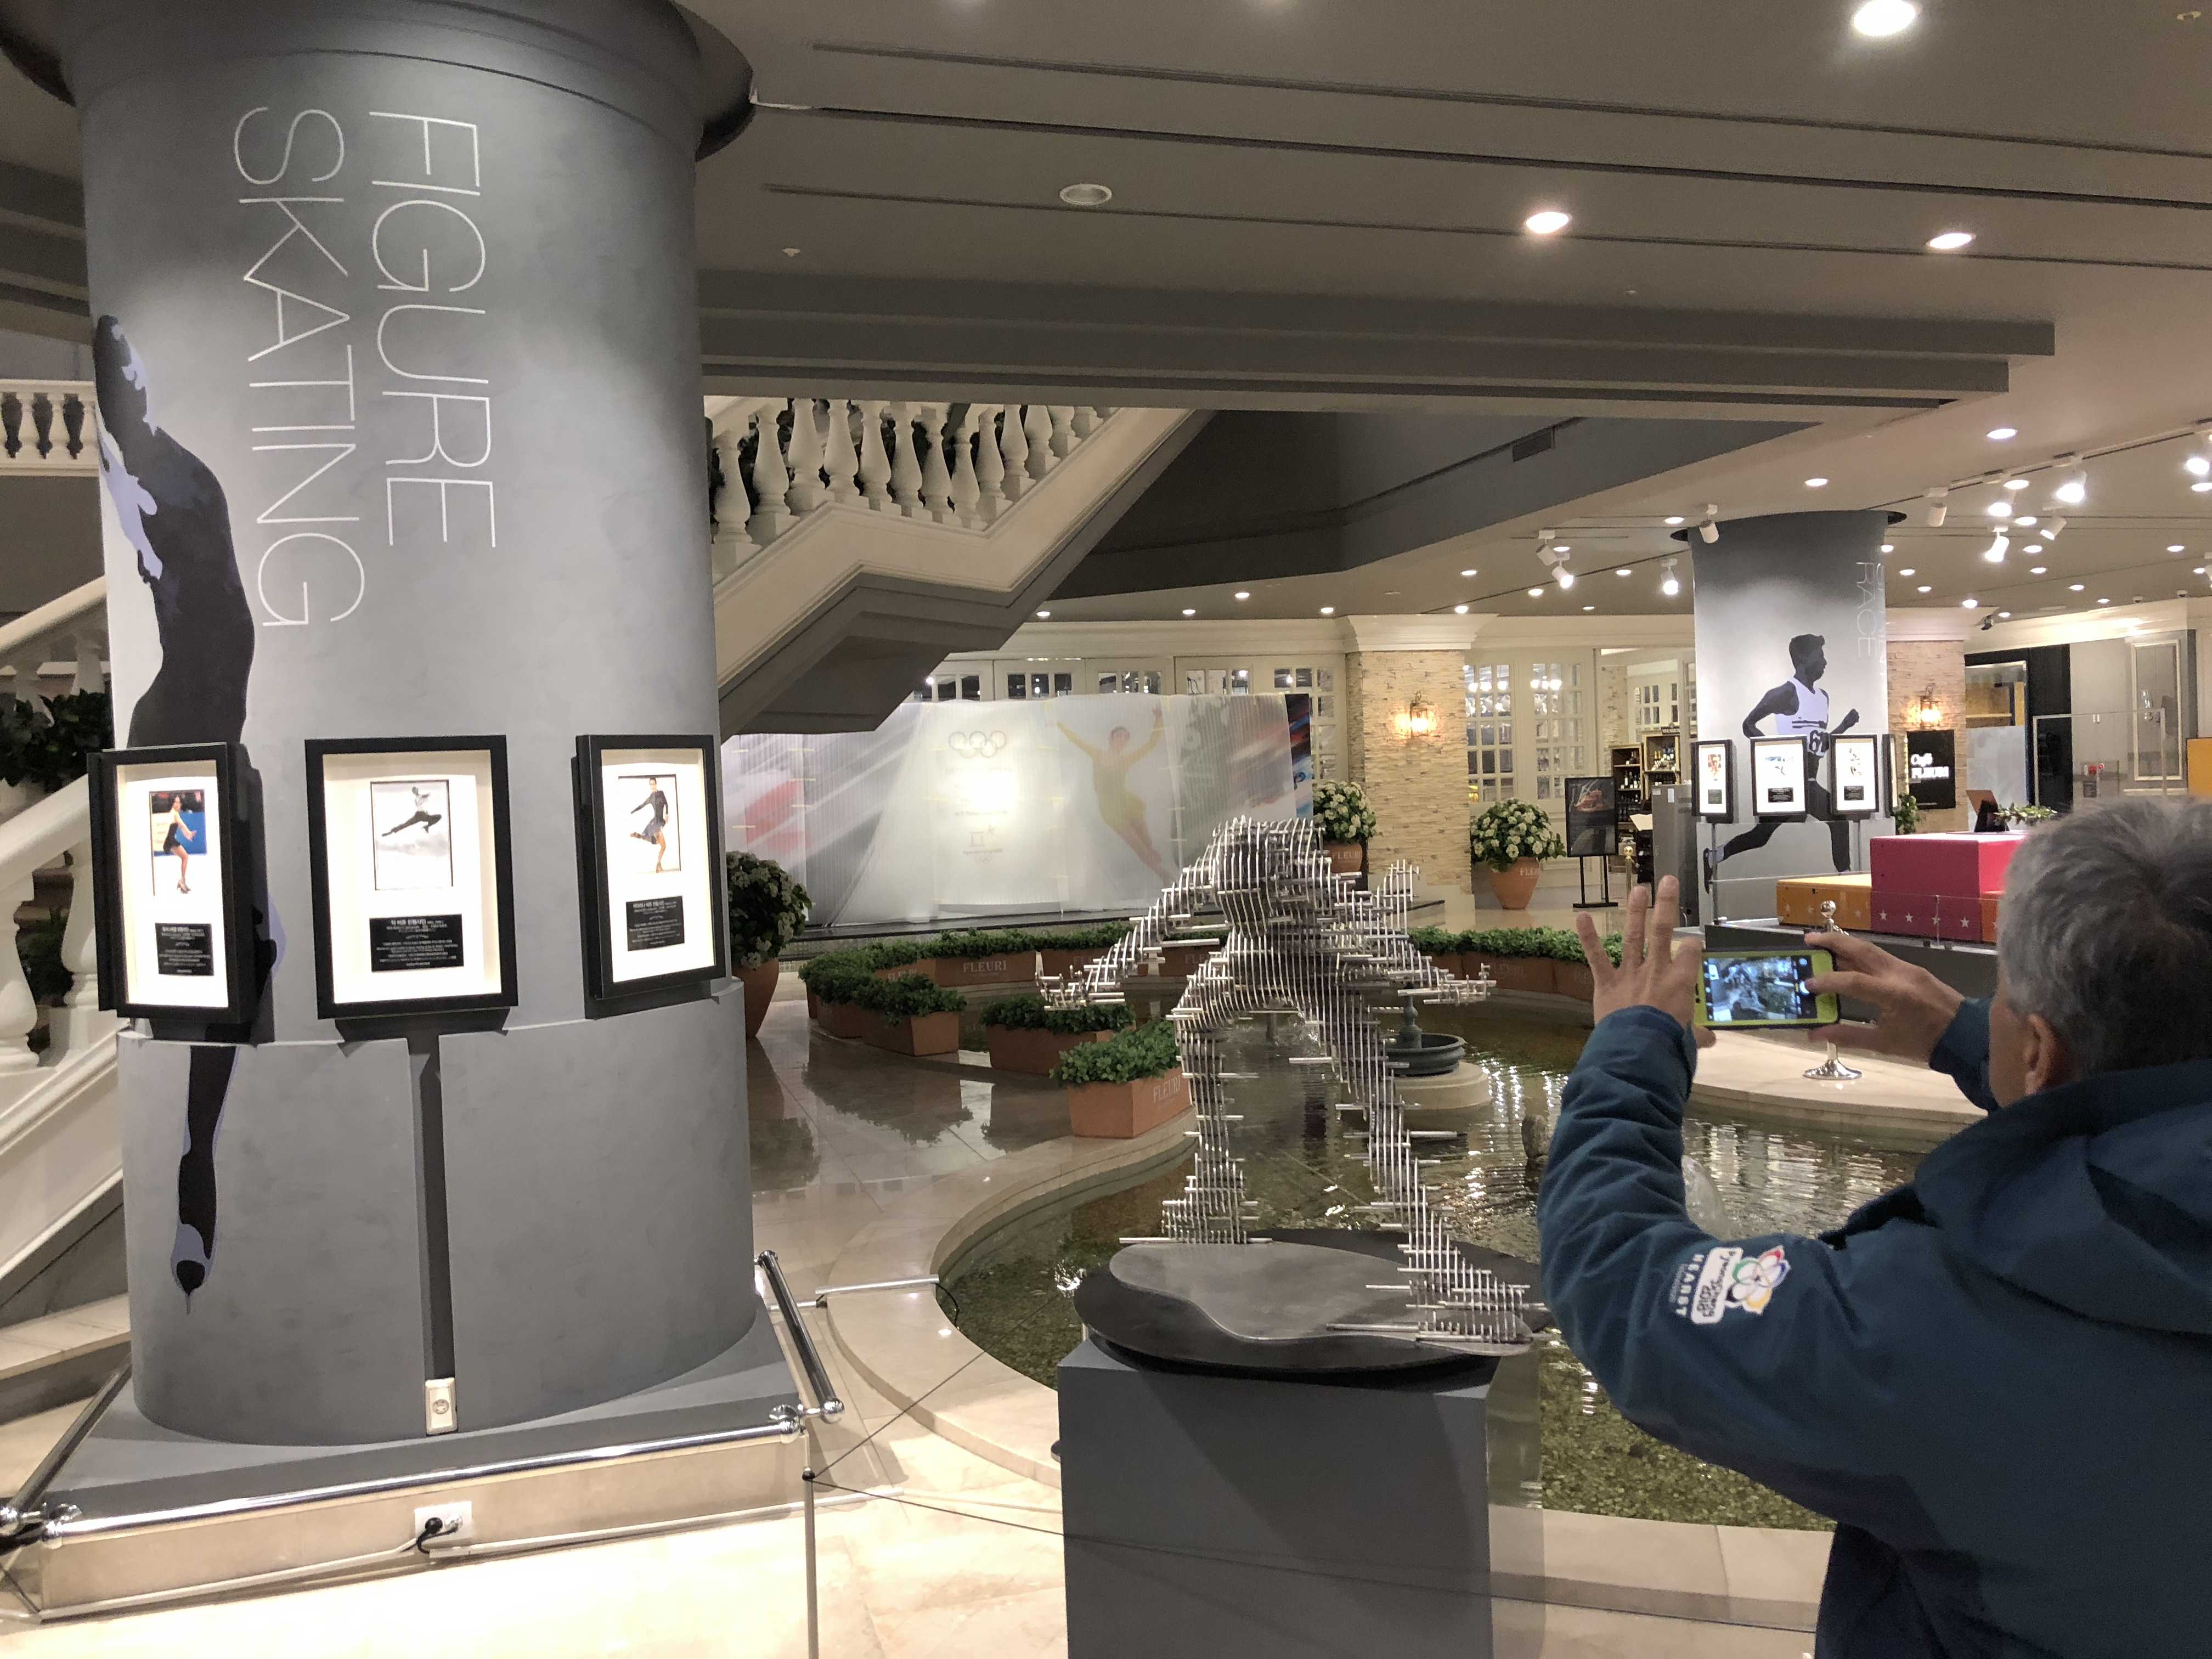 PHOTOS: Pyeongchang hotel lobby morphs into Olympics museum